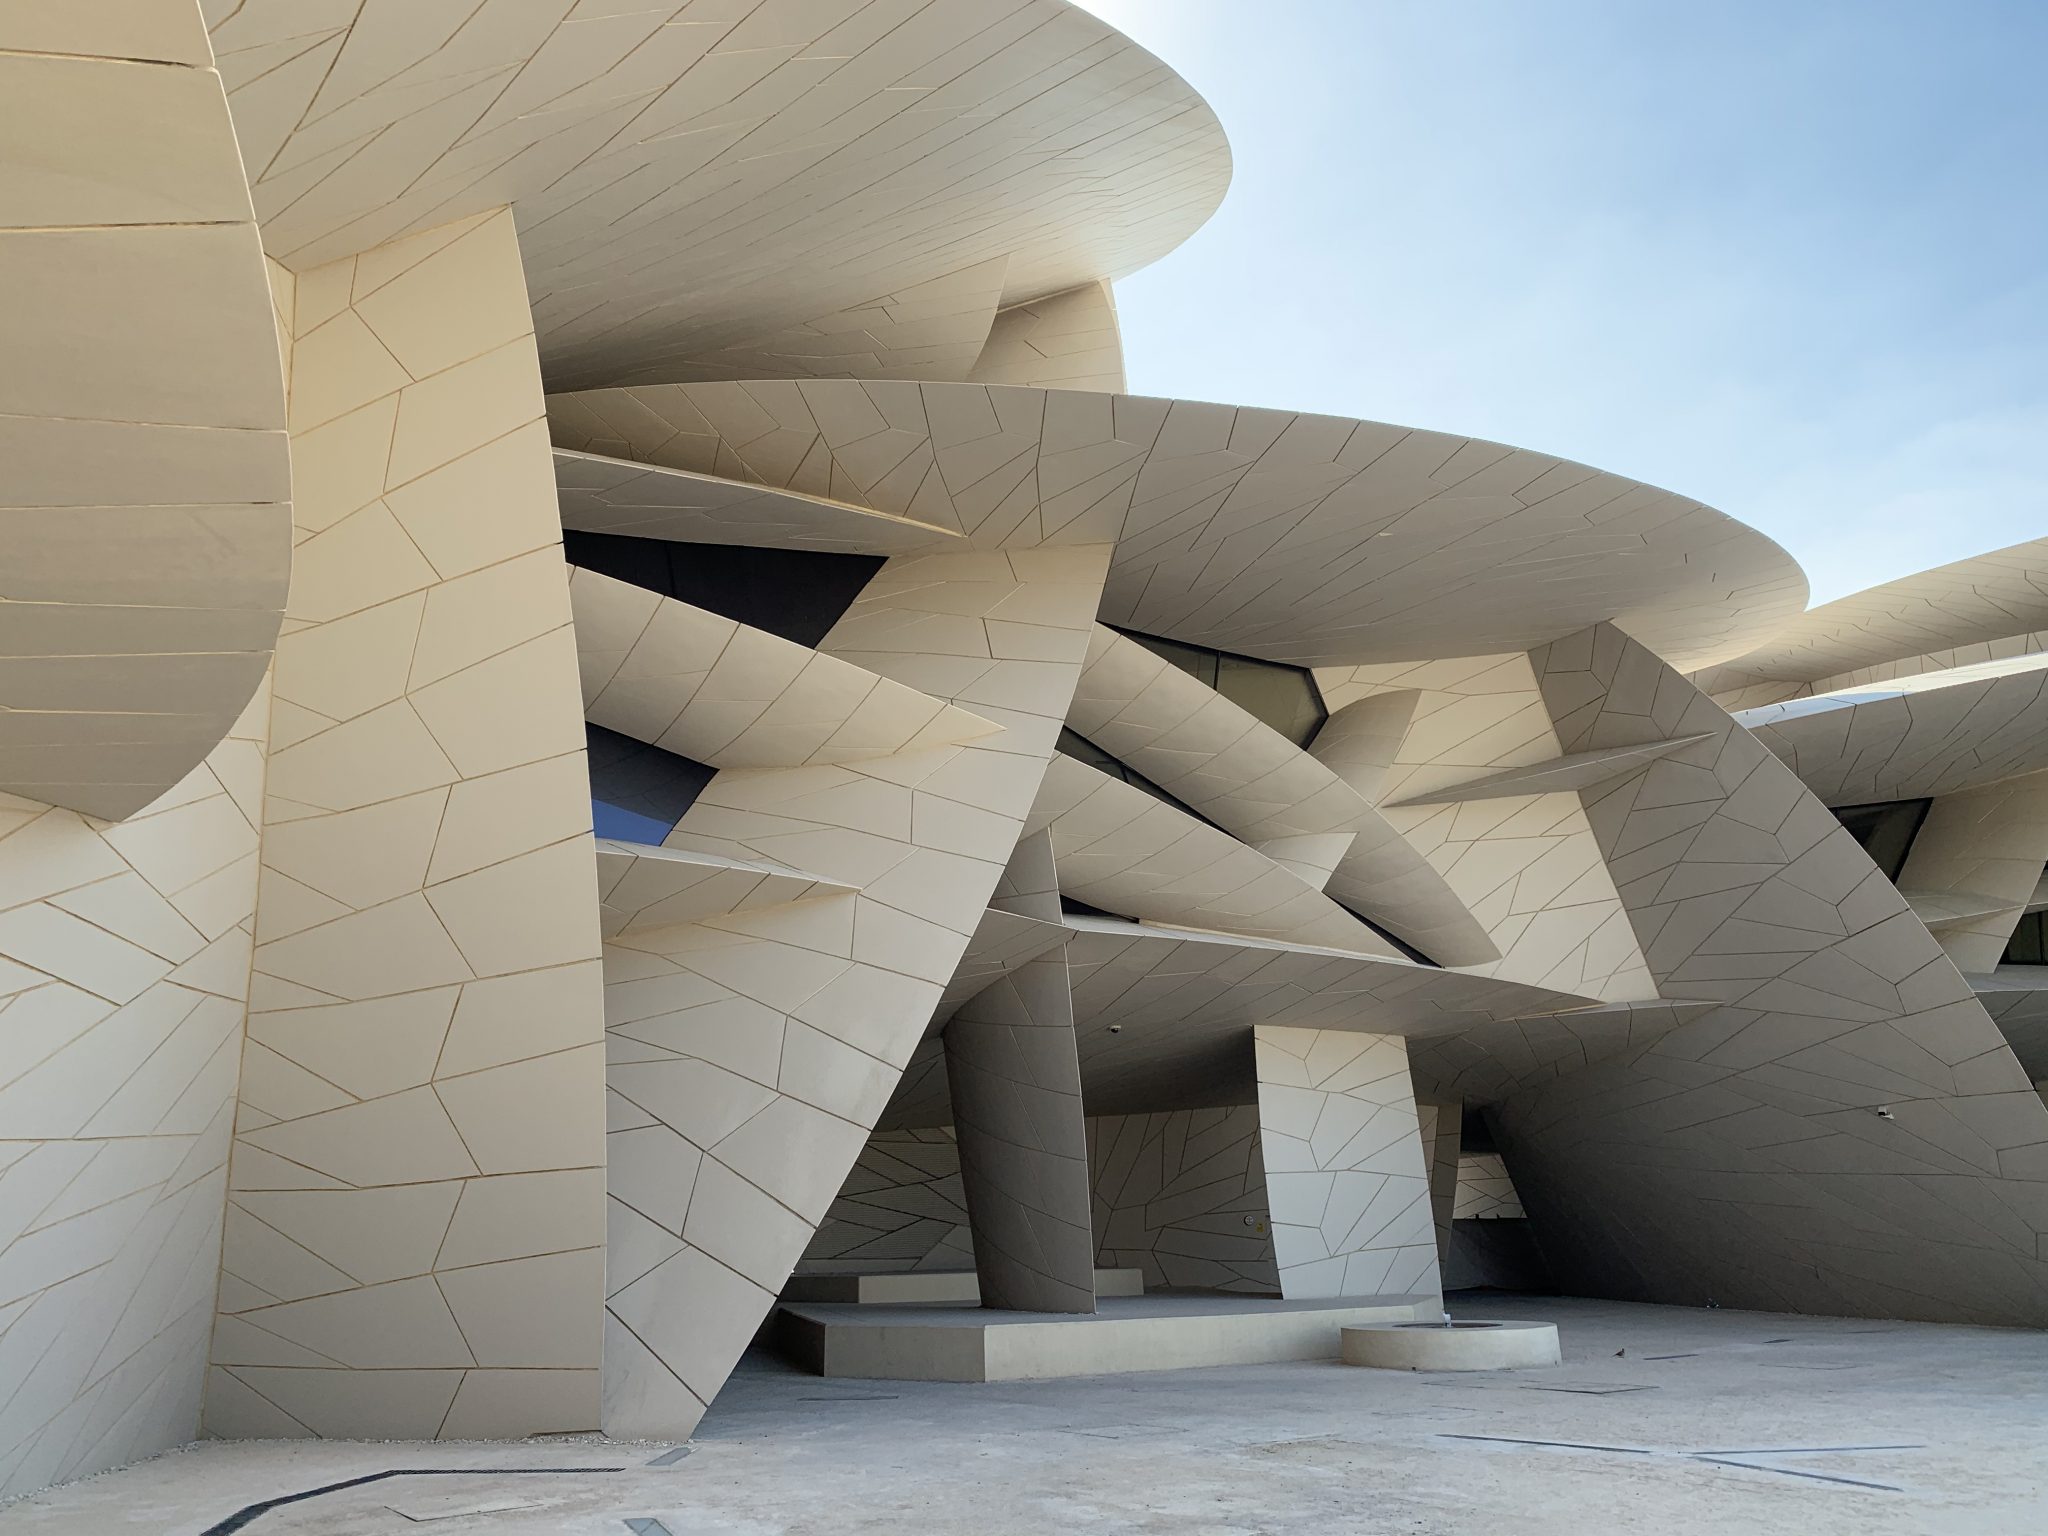 Jean Nouvel - Desert Rose - Zest and Curiosity - Qatar - Architecture